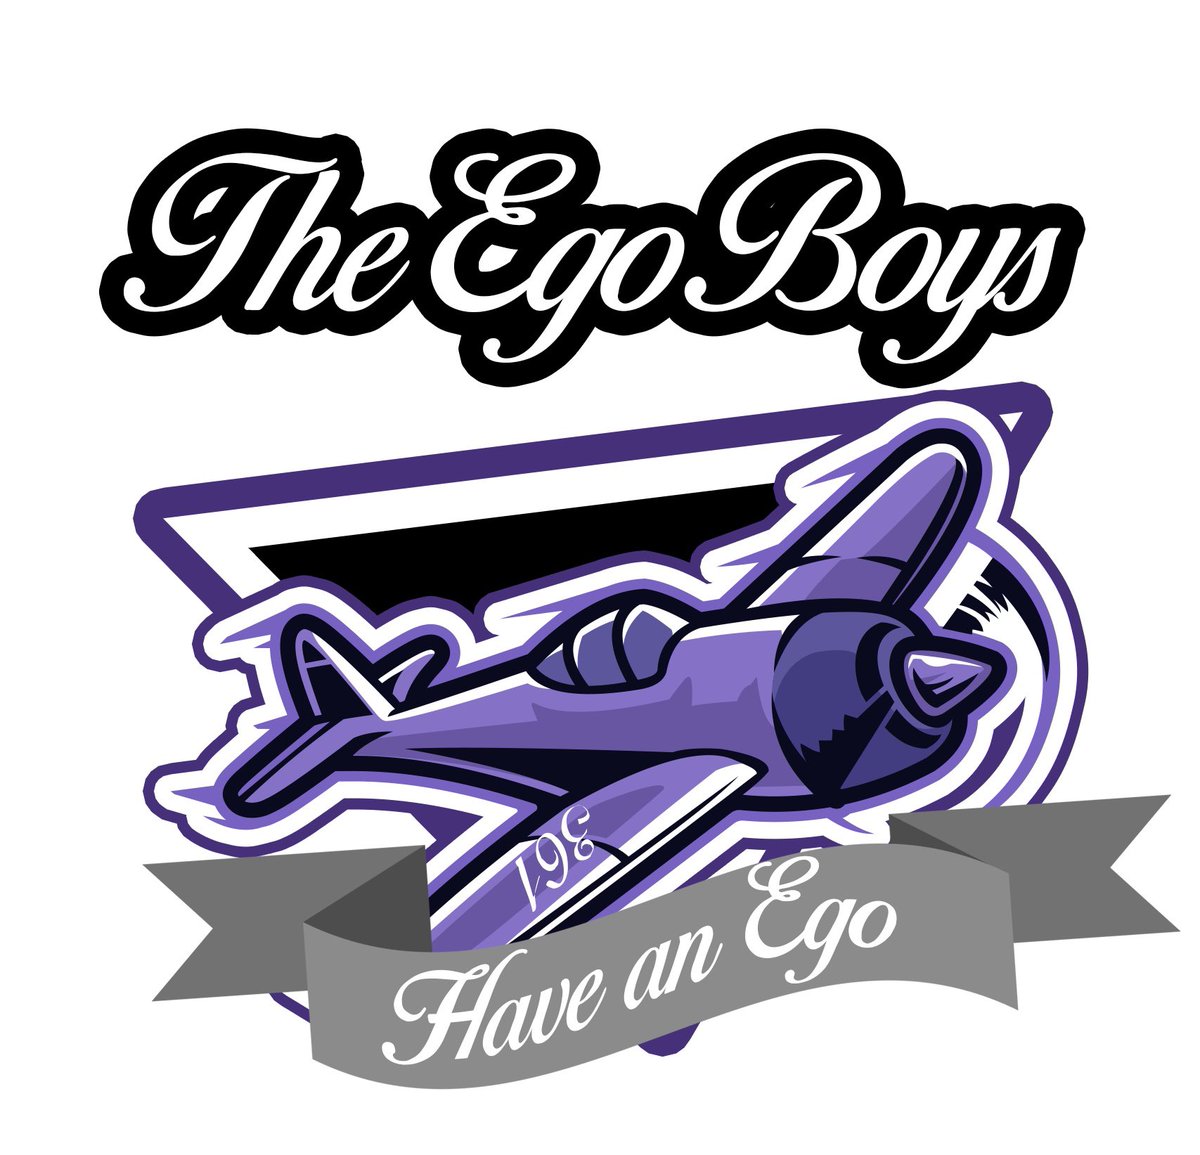 .@TheEgoBoys Are soaring towards greatness. ✈️🎮#HaveAnEgo #eSports
 #CorpusChristi #BlueAngels #Texas #CoastalBend